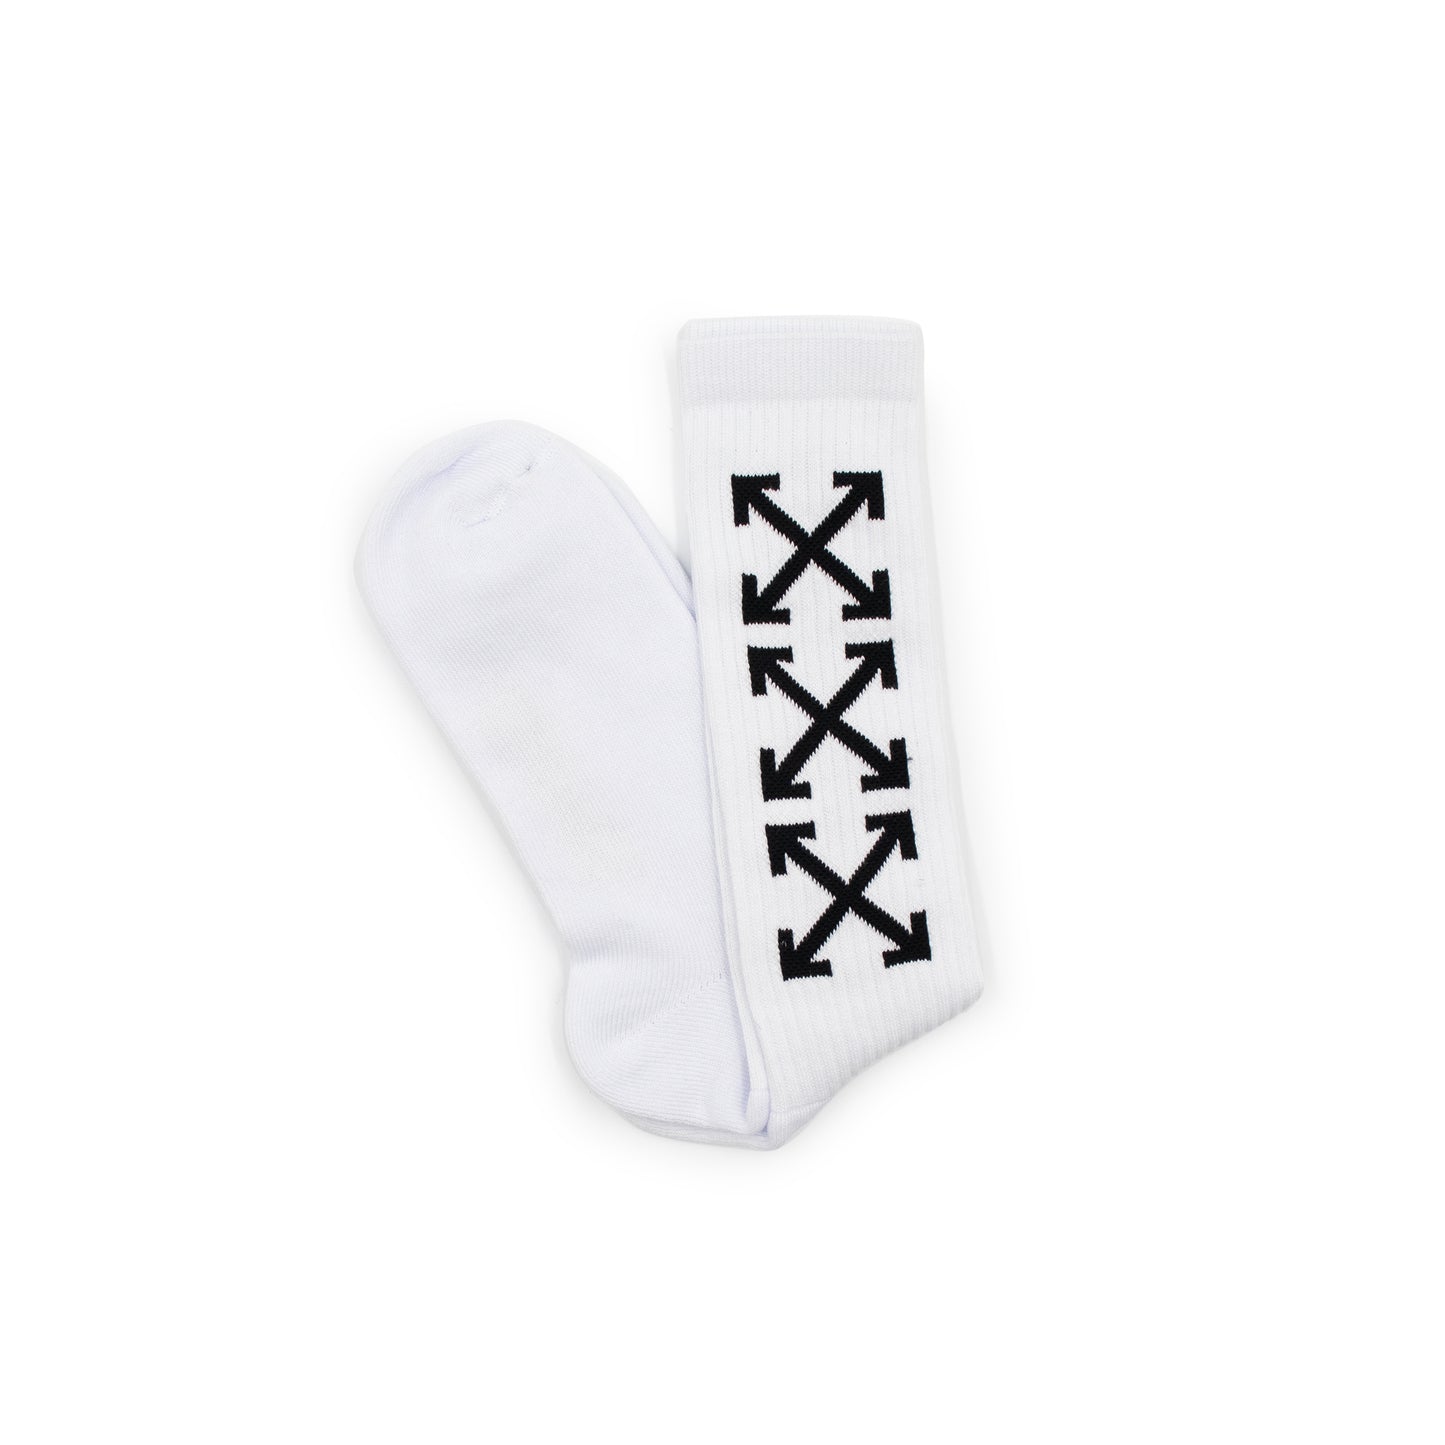 Classic Mid Length Arrows Socks in White/Black